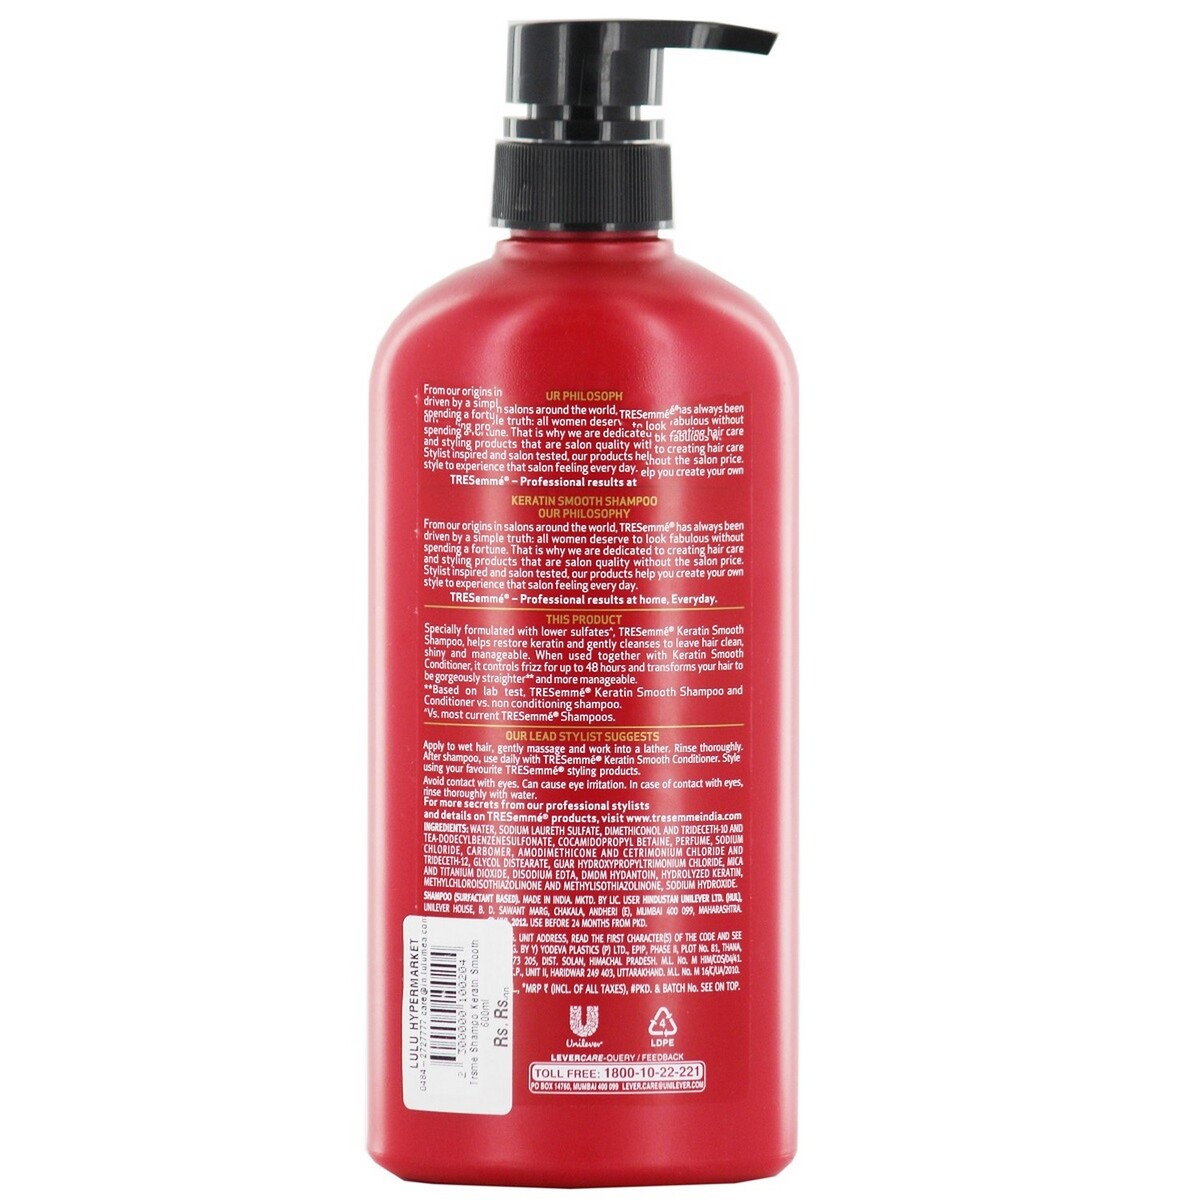 TRESemme Shampoo Keratin Smooth 580ml